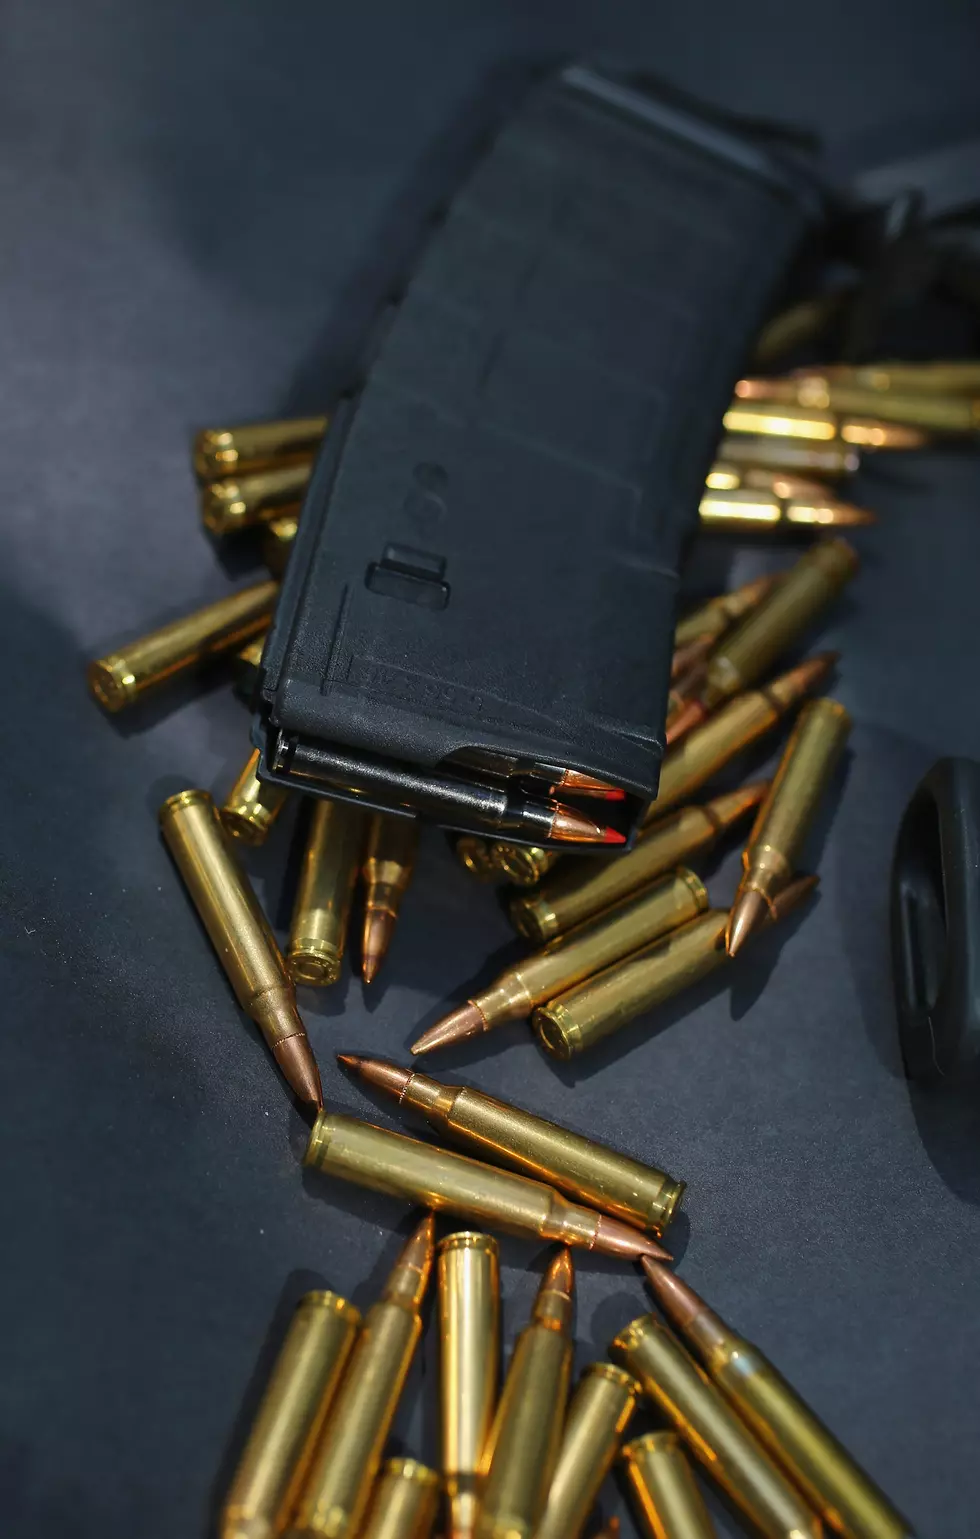 Caddo Commission Proposes New Gun Legislation